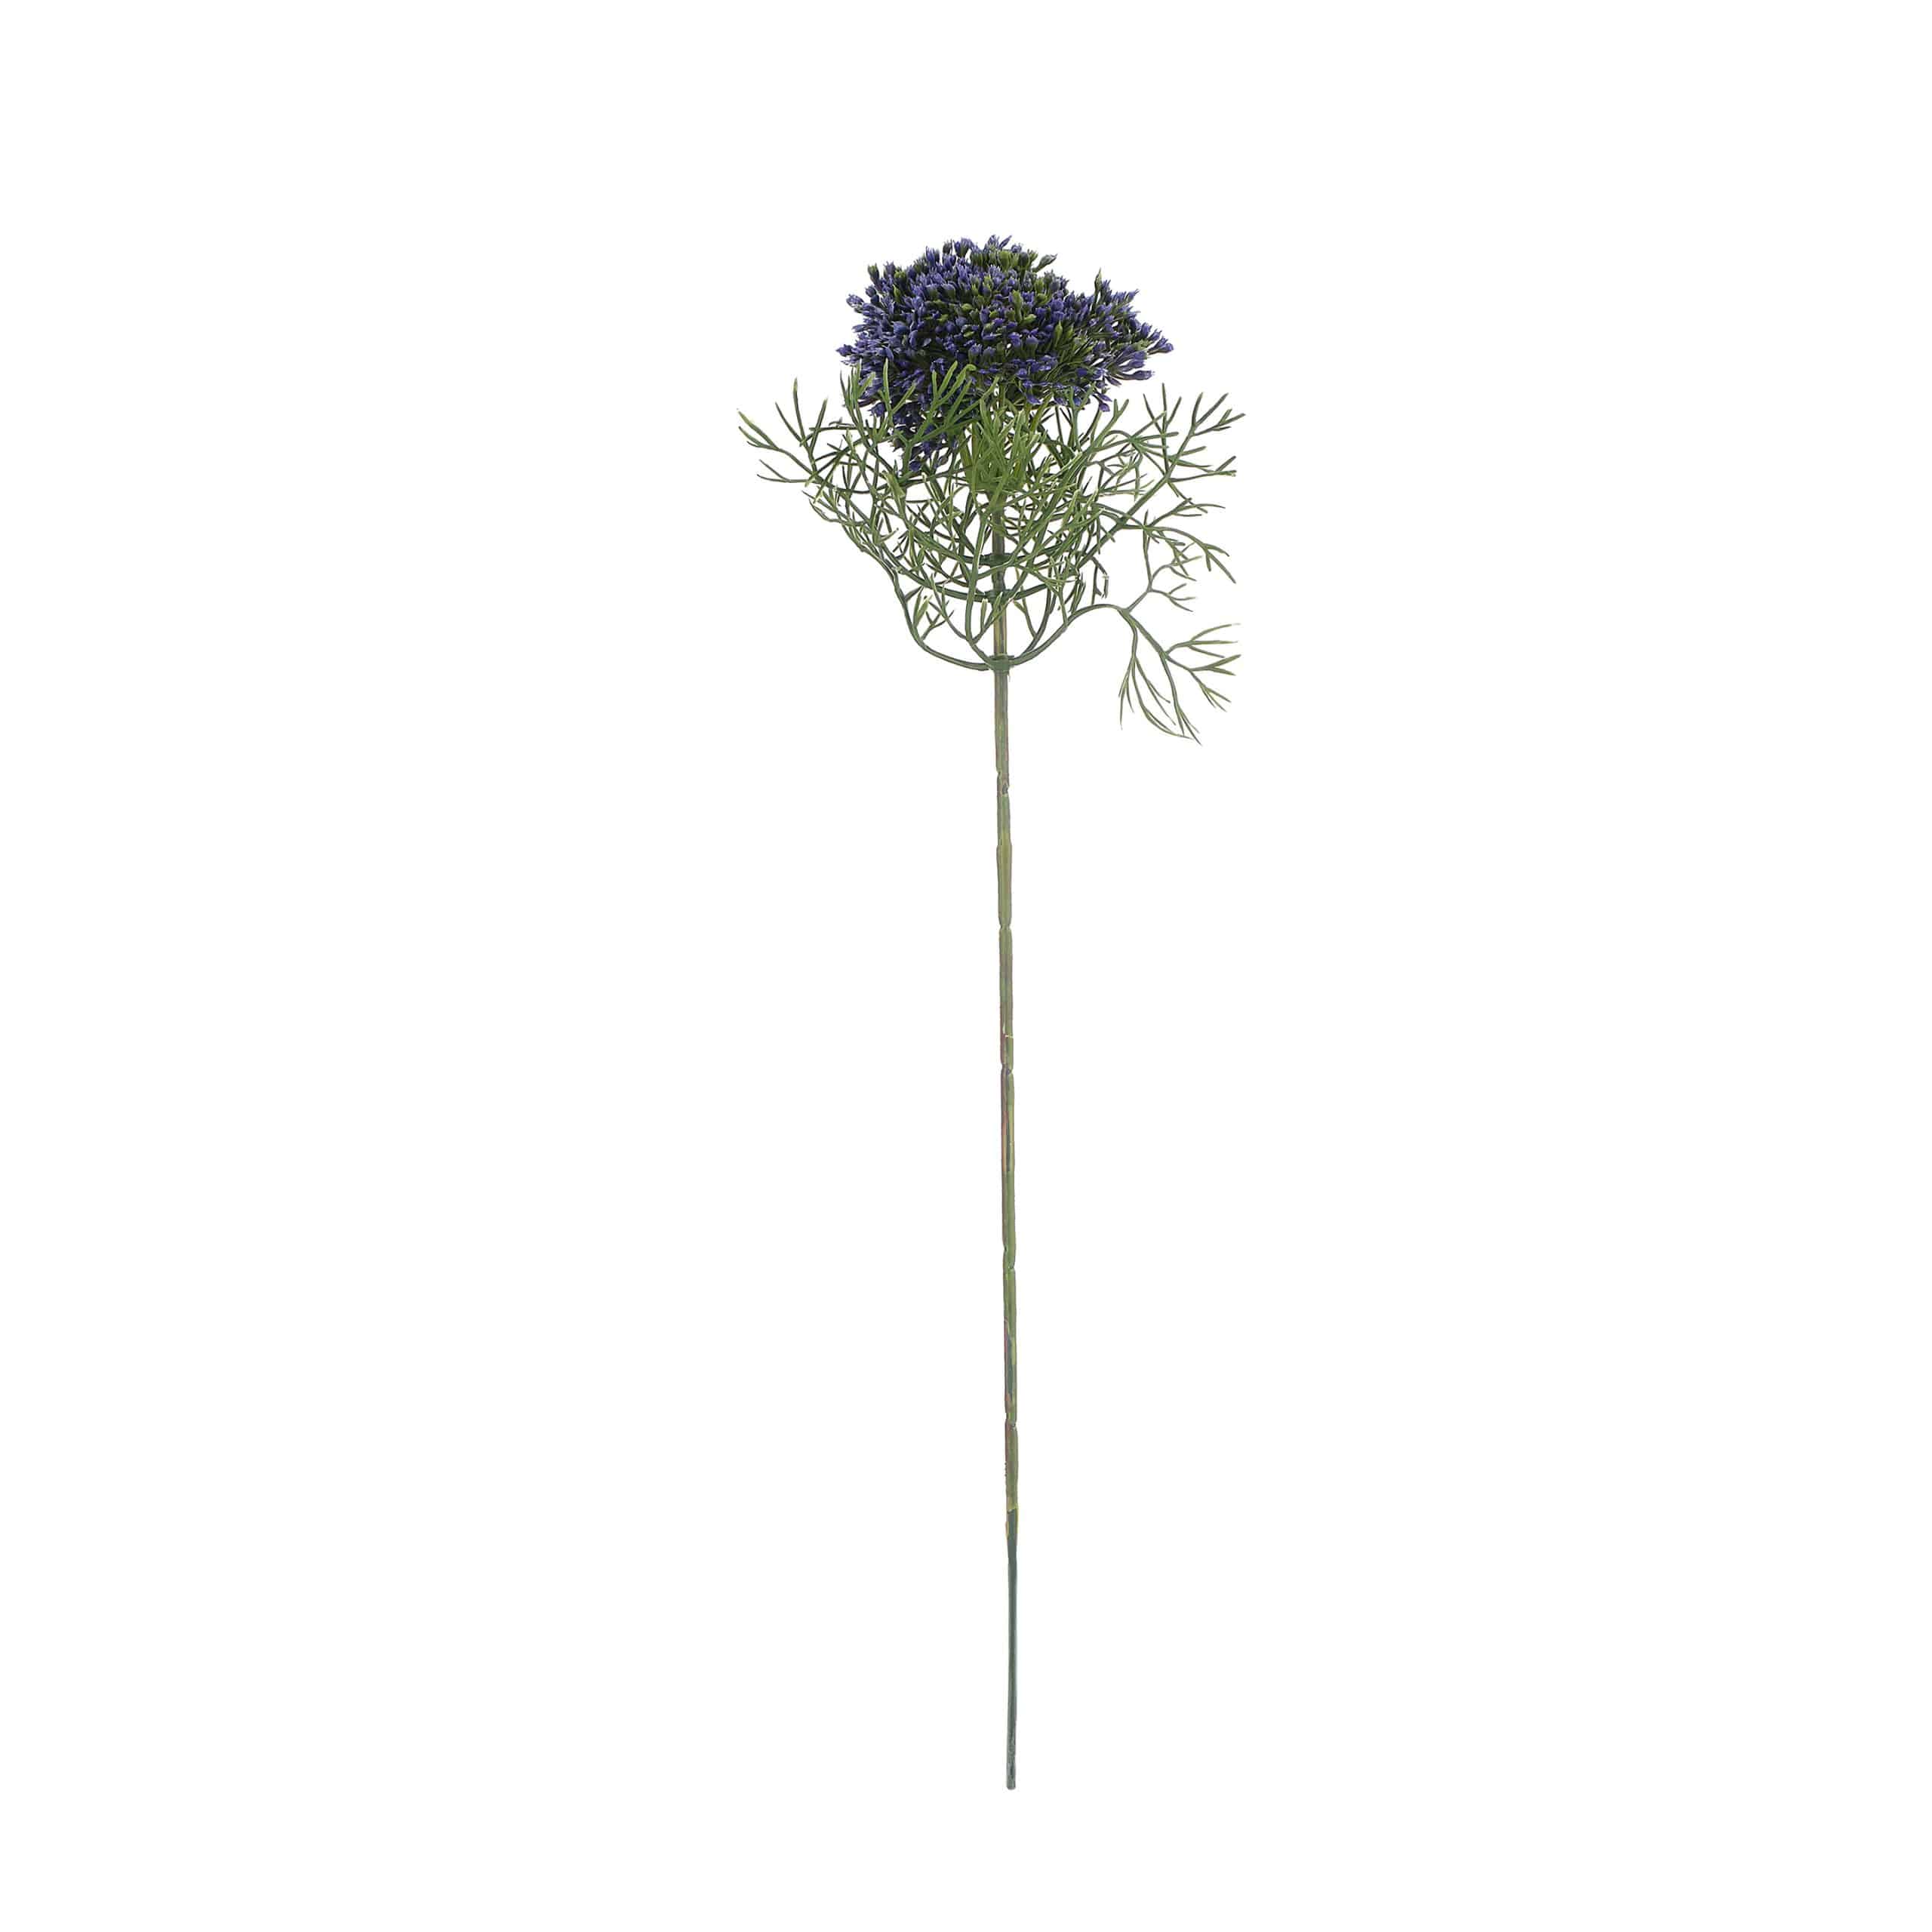 An artificial blue allium plant